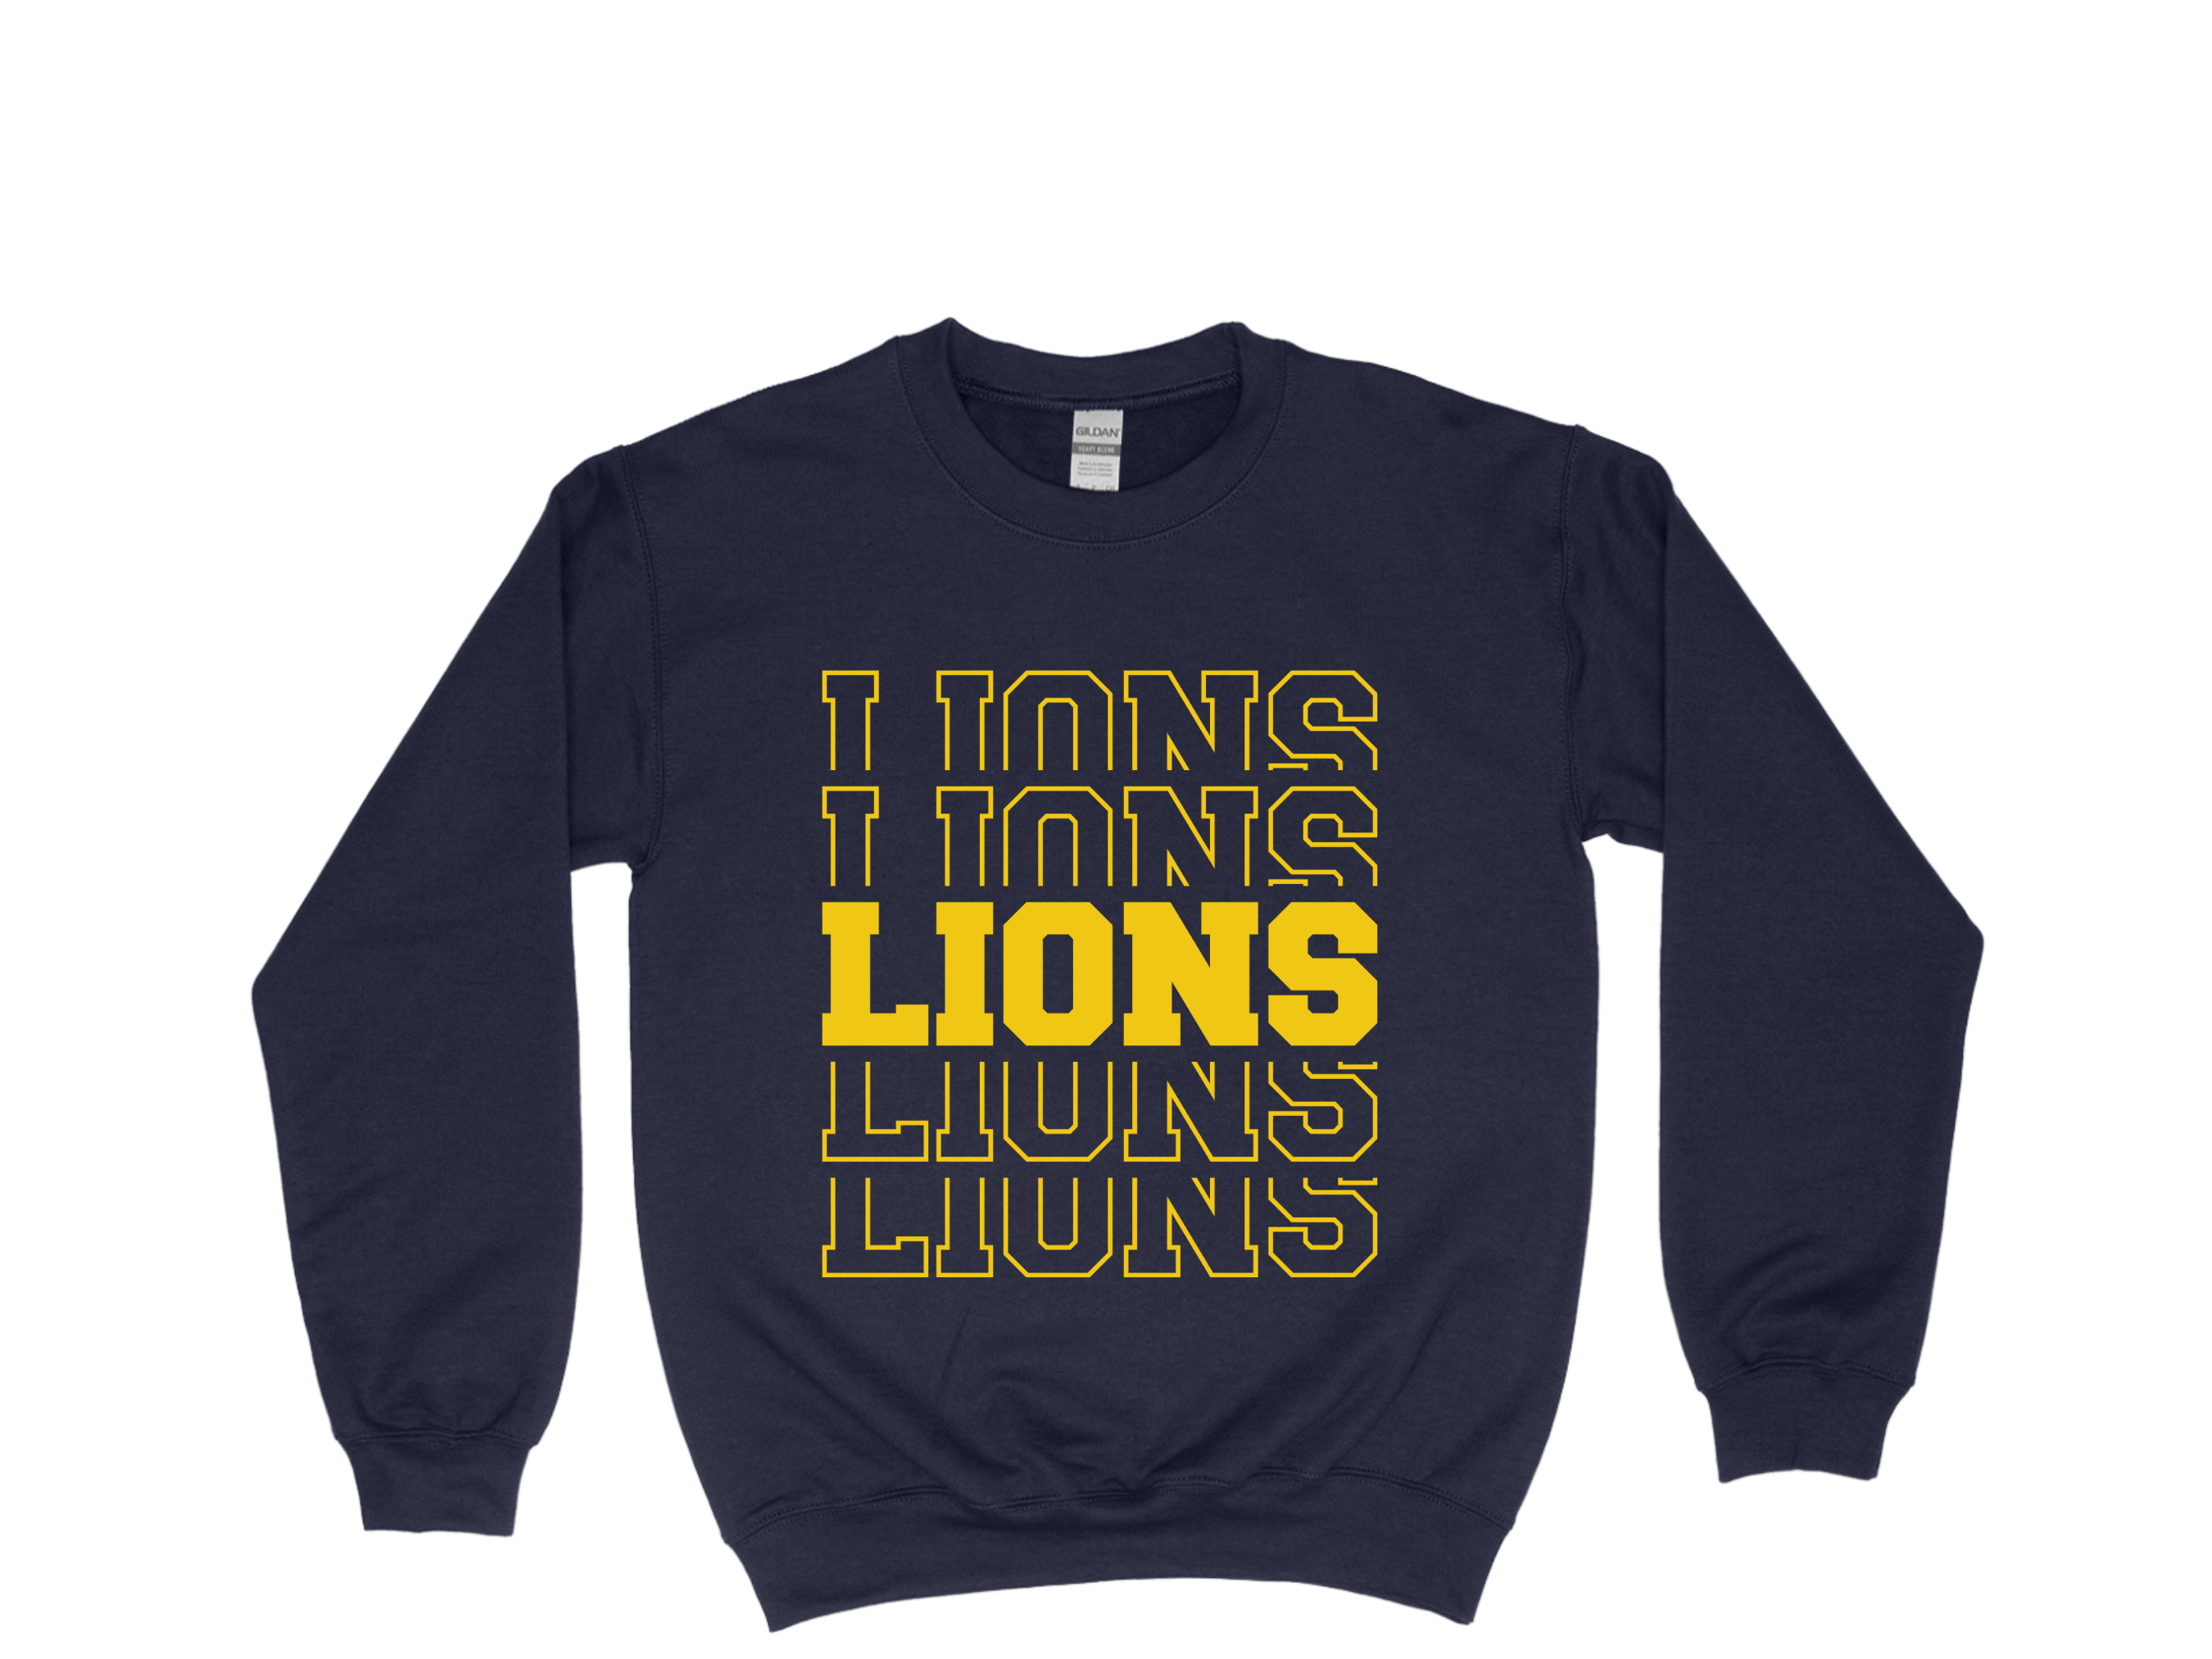 Lionss - Navy Sweatshirt  Large Image